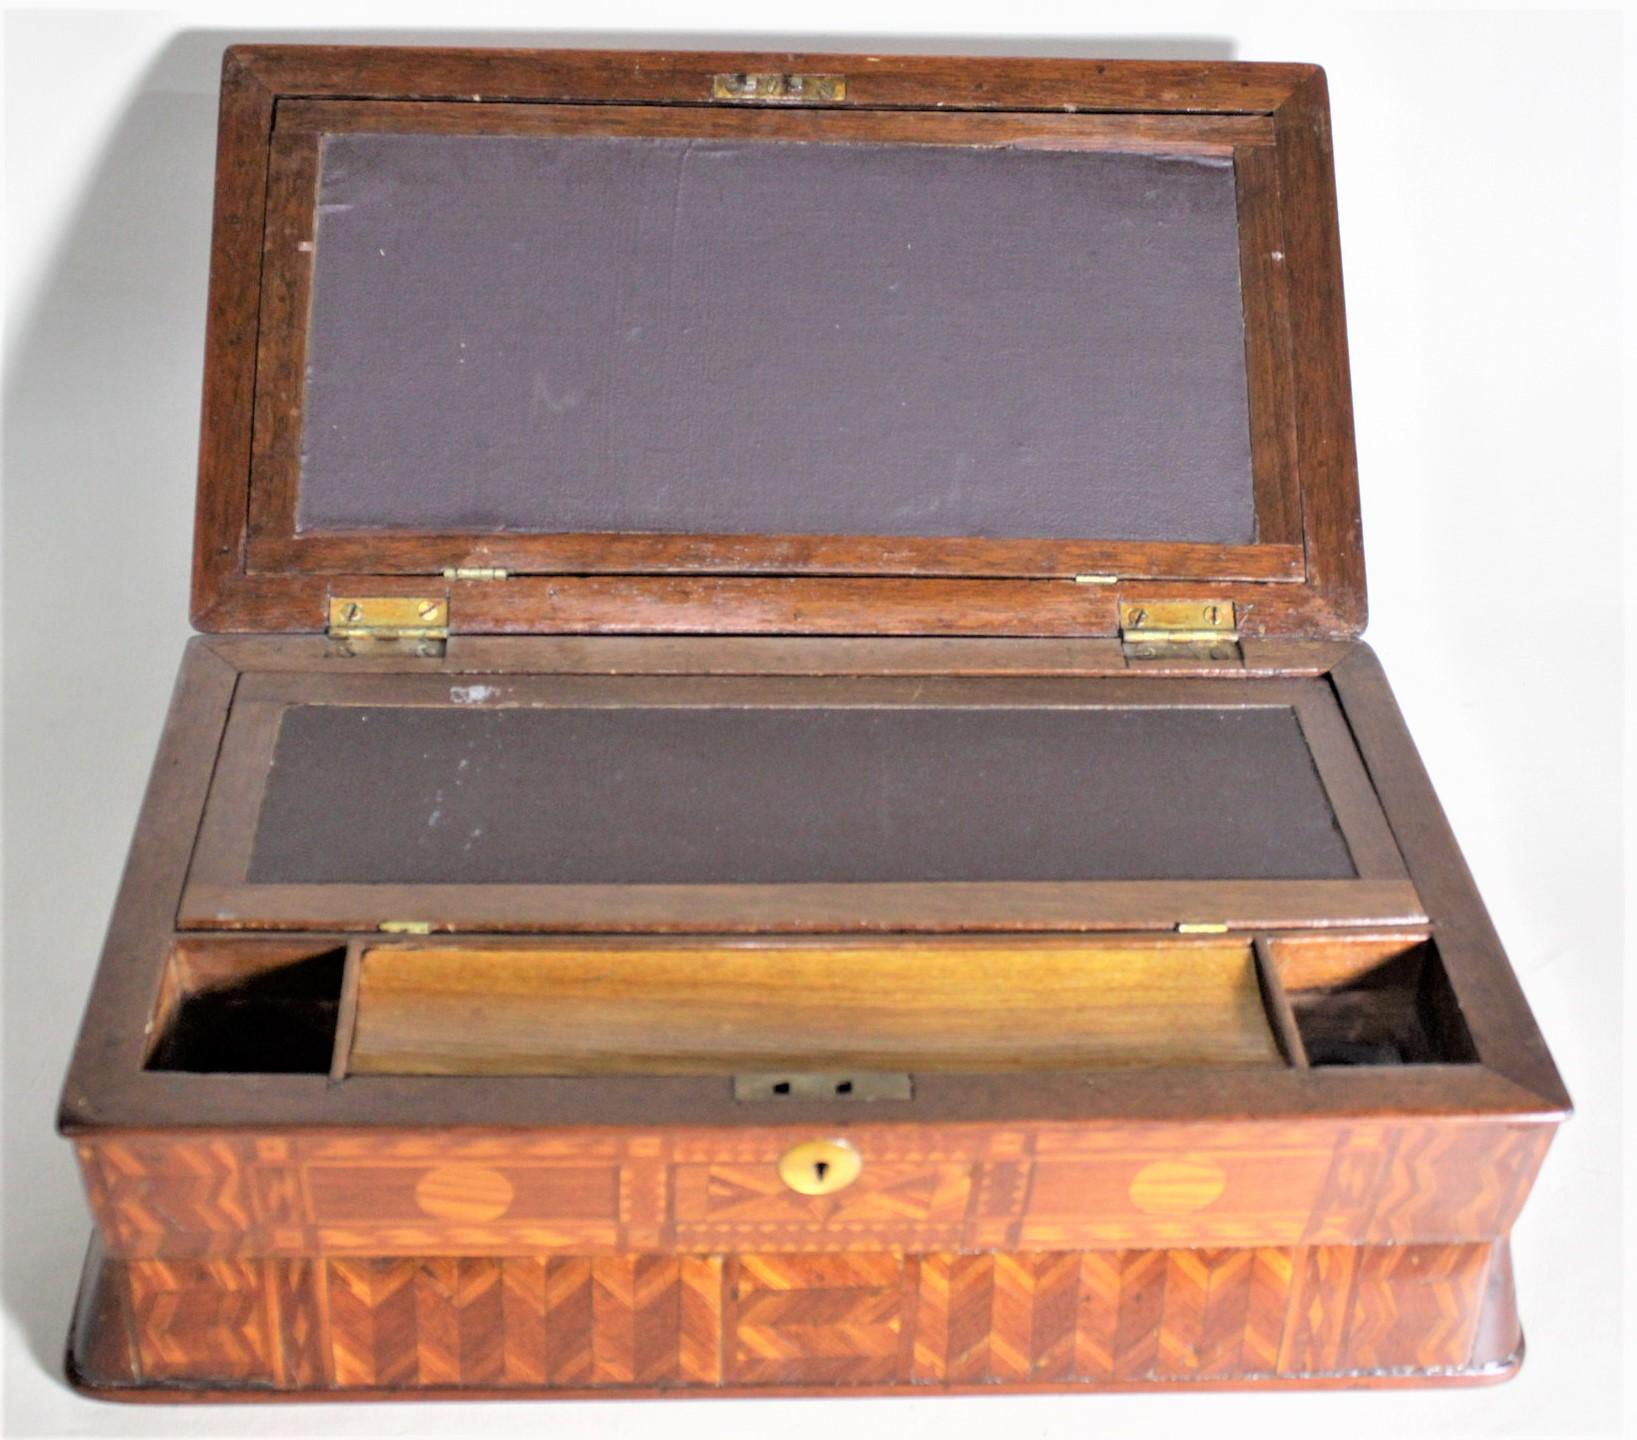 Superb Antique Folk Art Parquetry Casket Styled Writing Box or Lap Desk For Sale 3